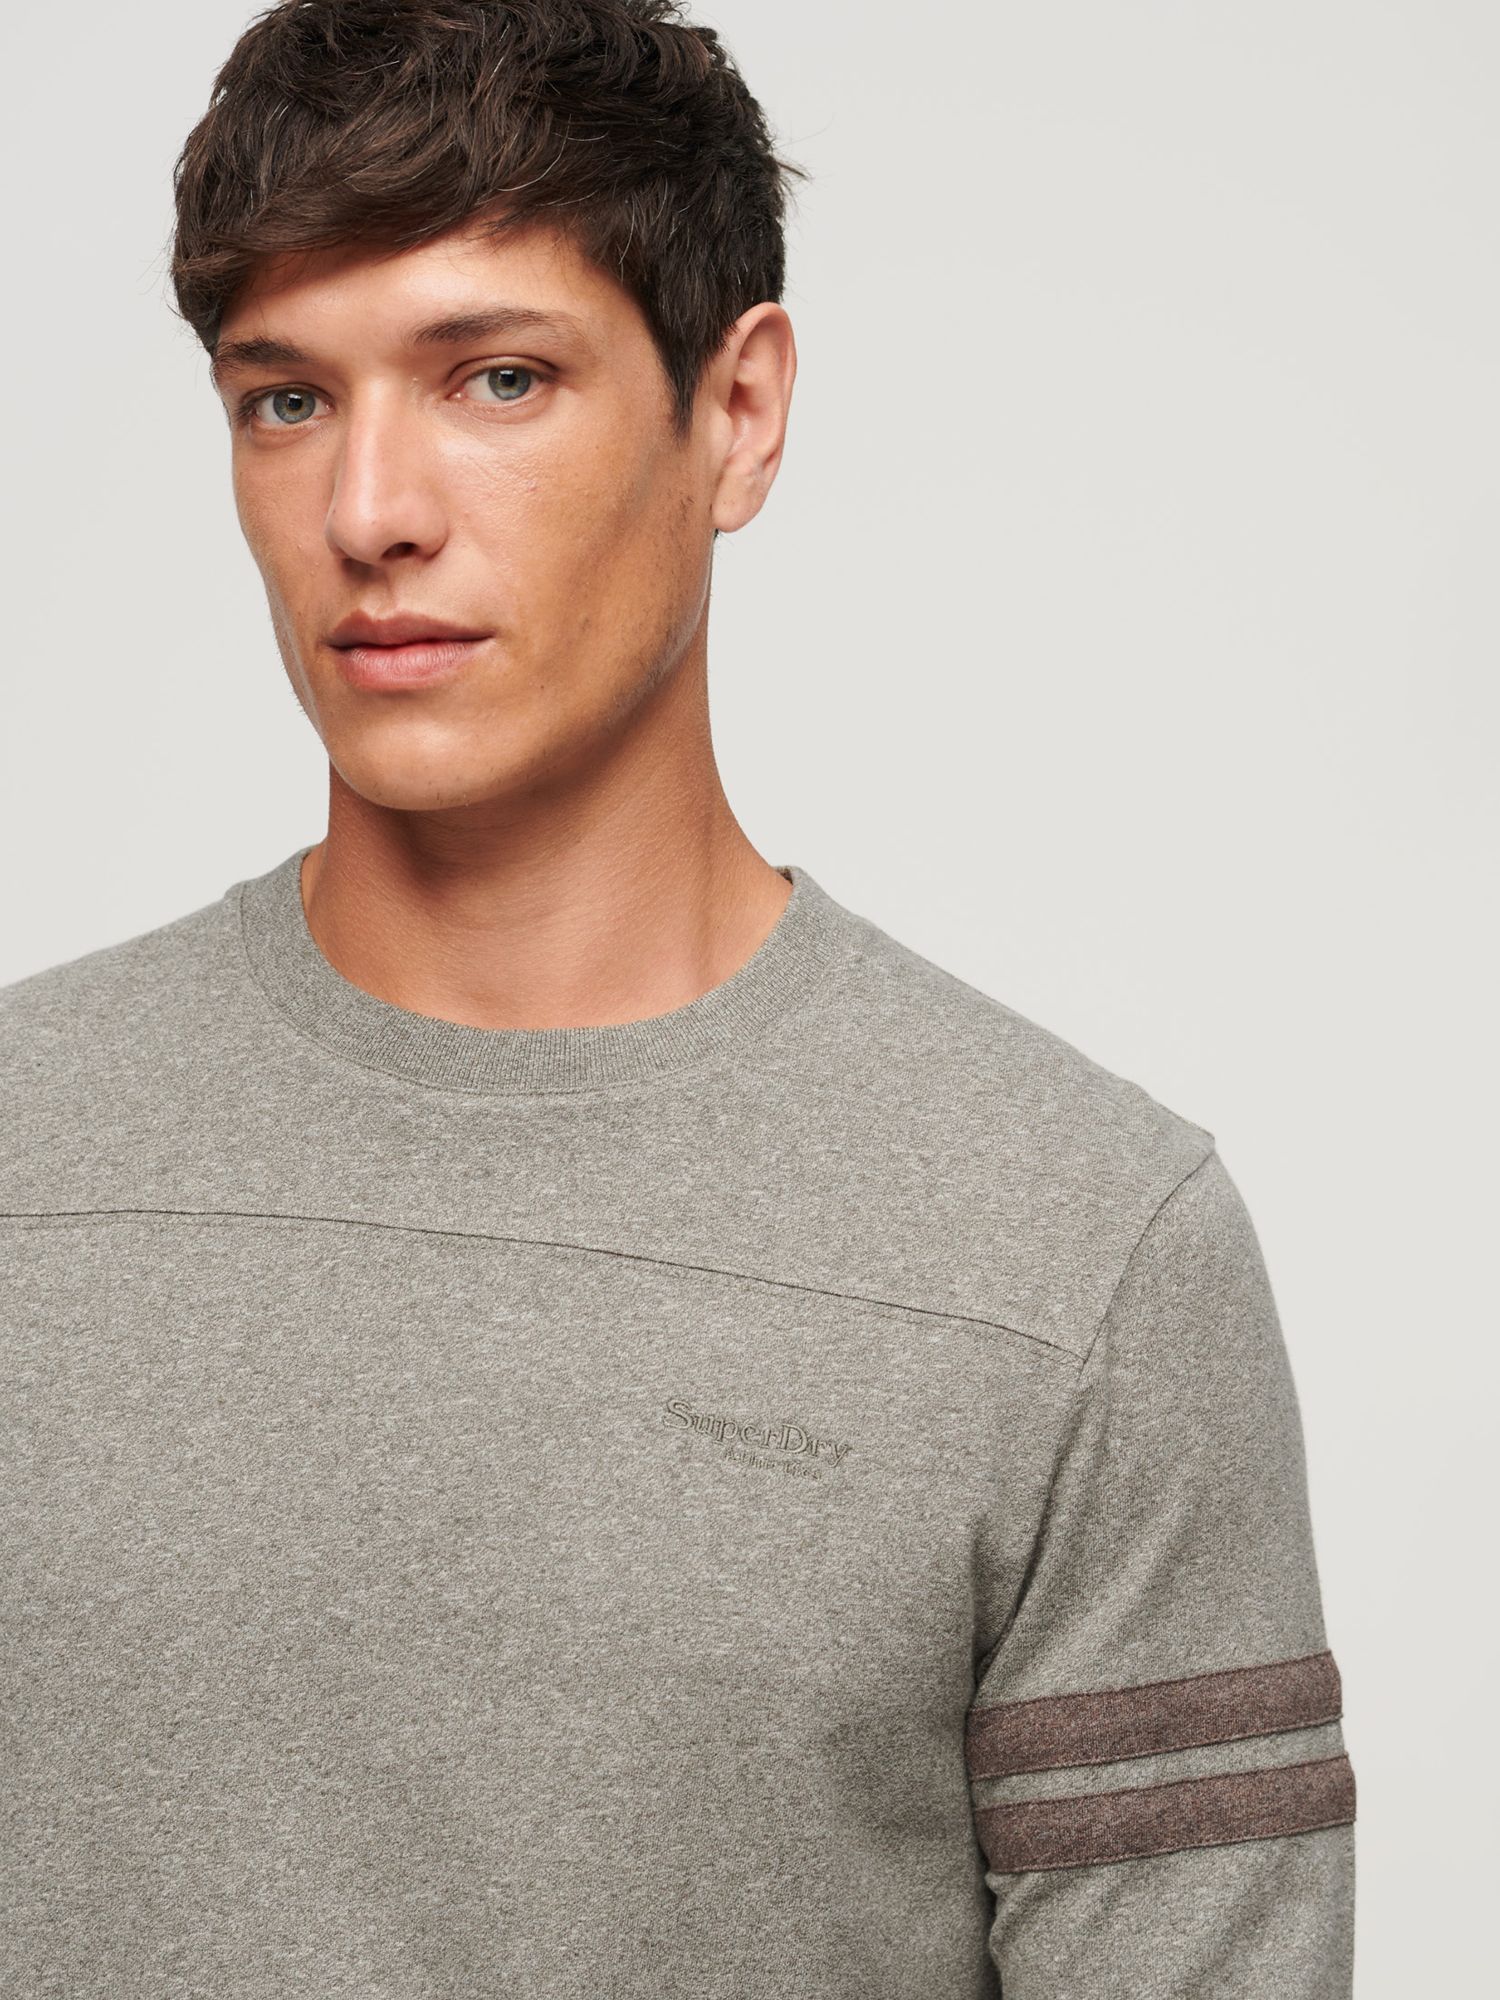 Men's Organic Cotton Essential Logo Quarterback T-Shirt in Glacier